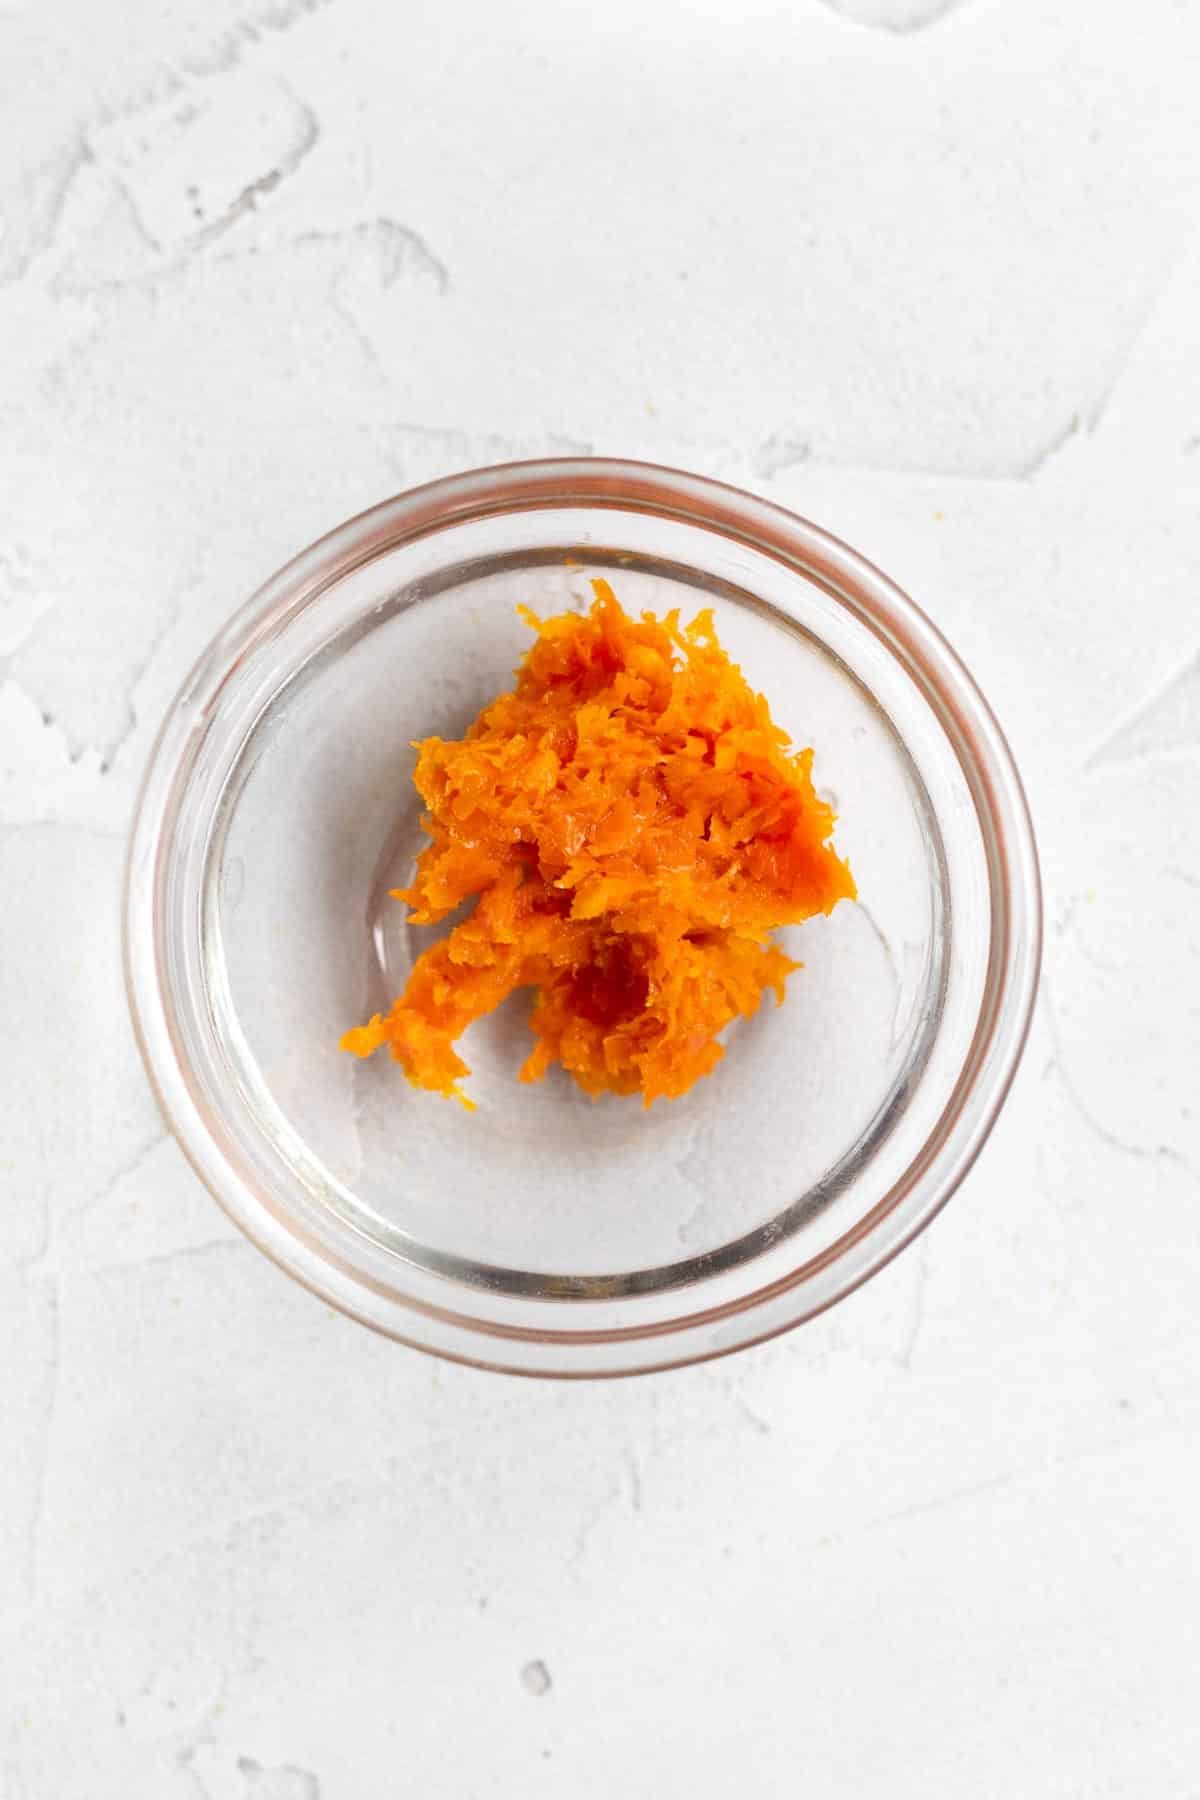 Bright orange zest of an orange in a glass bowl.